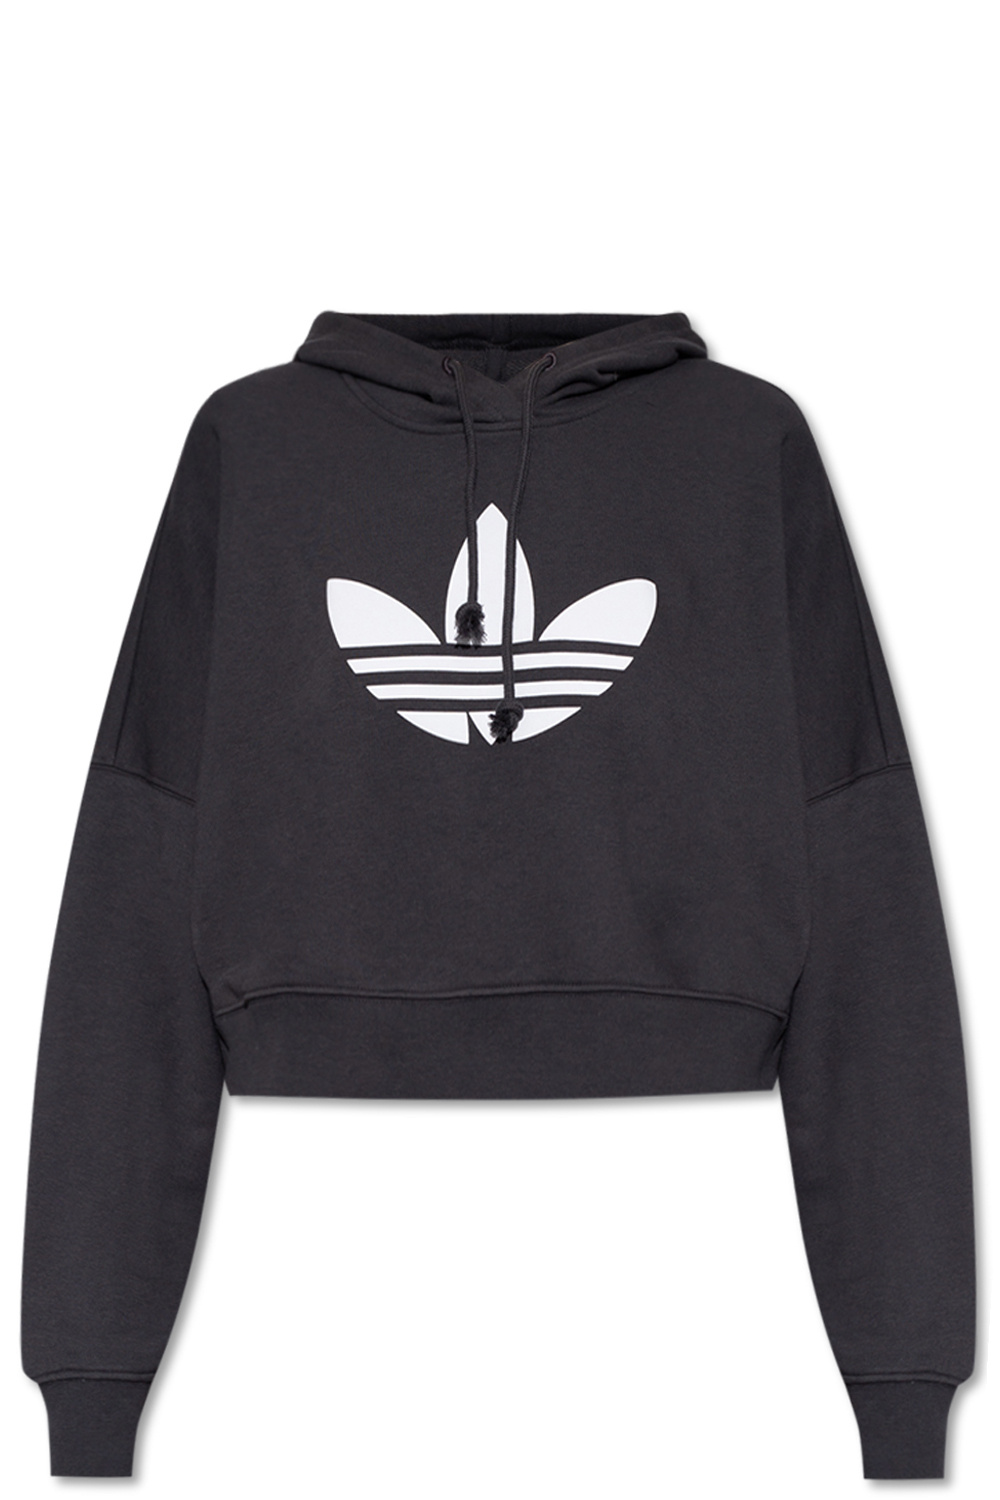 | ADIDAS Originals 3S hoodie SPLV Clothing Adidas | Tiro oversize | Jsy Cropped Ess StclaircomoShops Women\'s